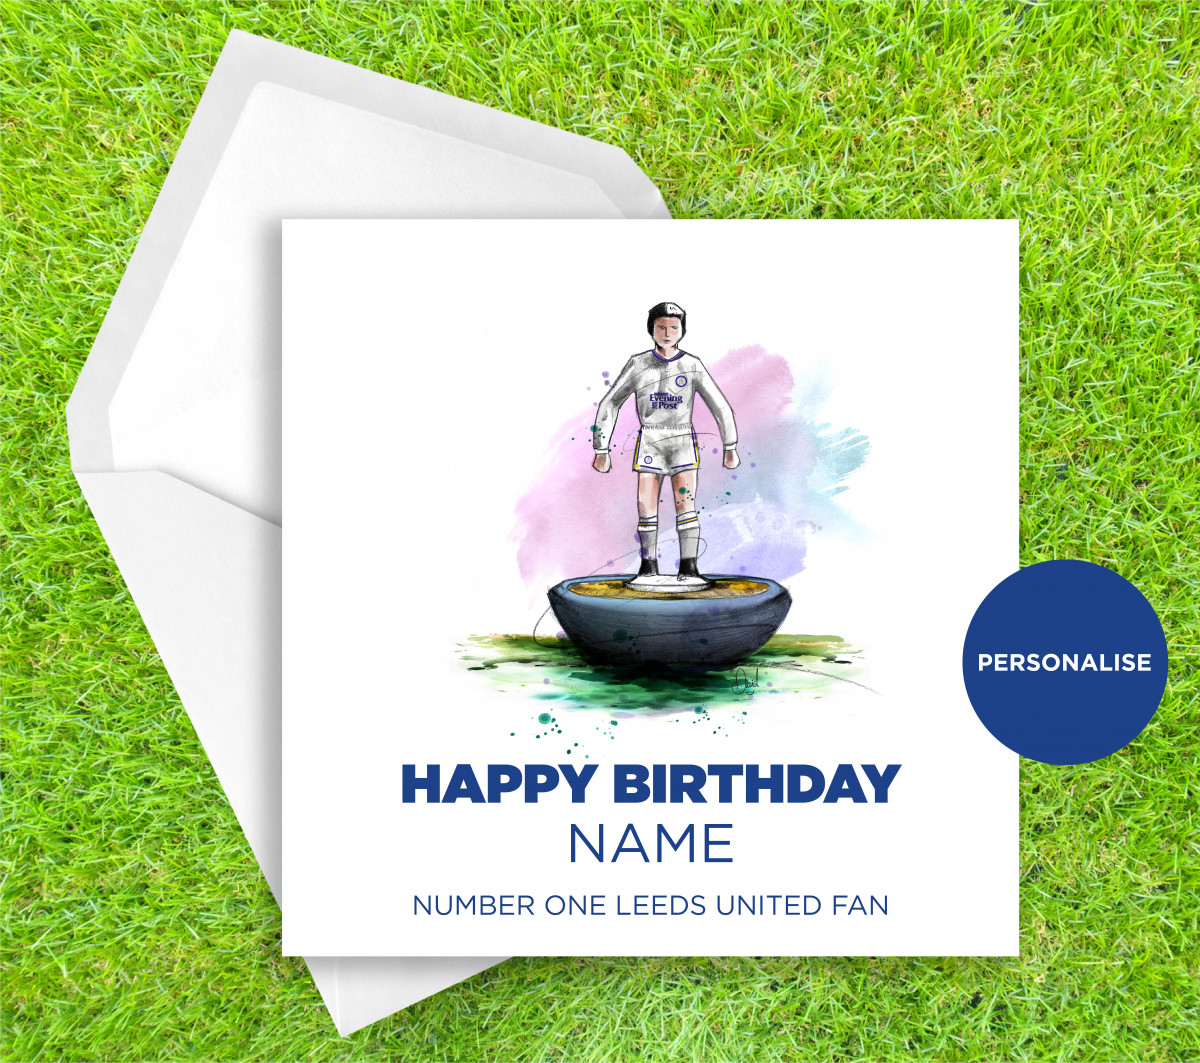 Leeds United, Subbuteo, personalised birthday card